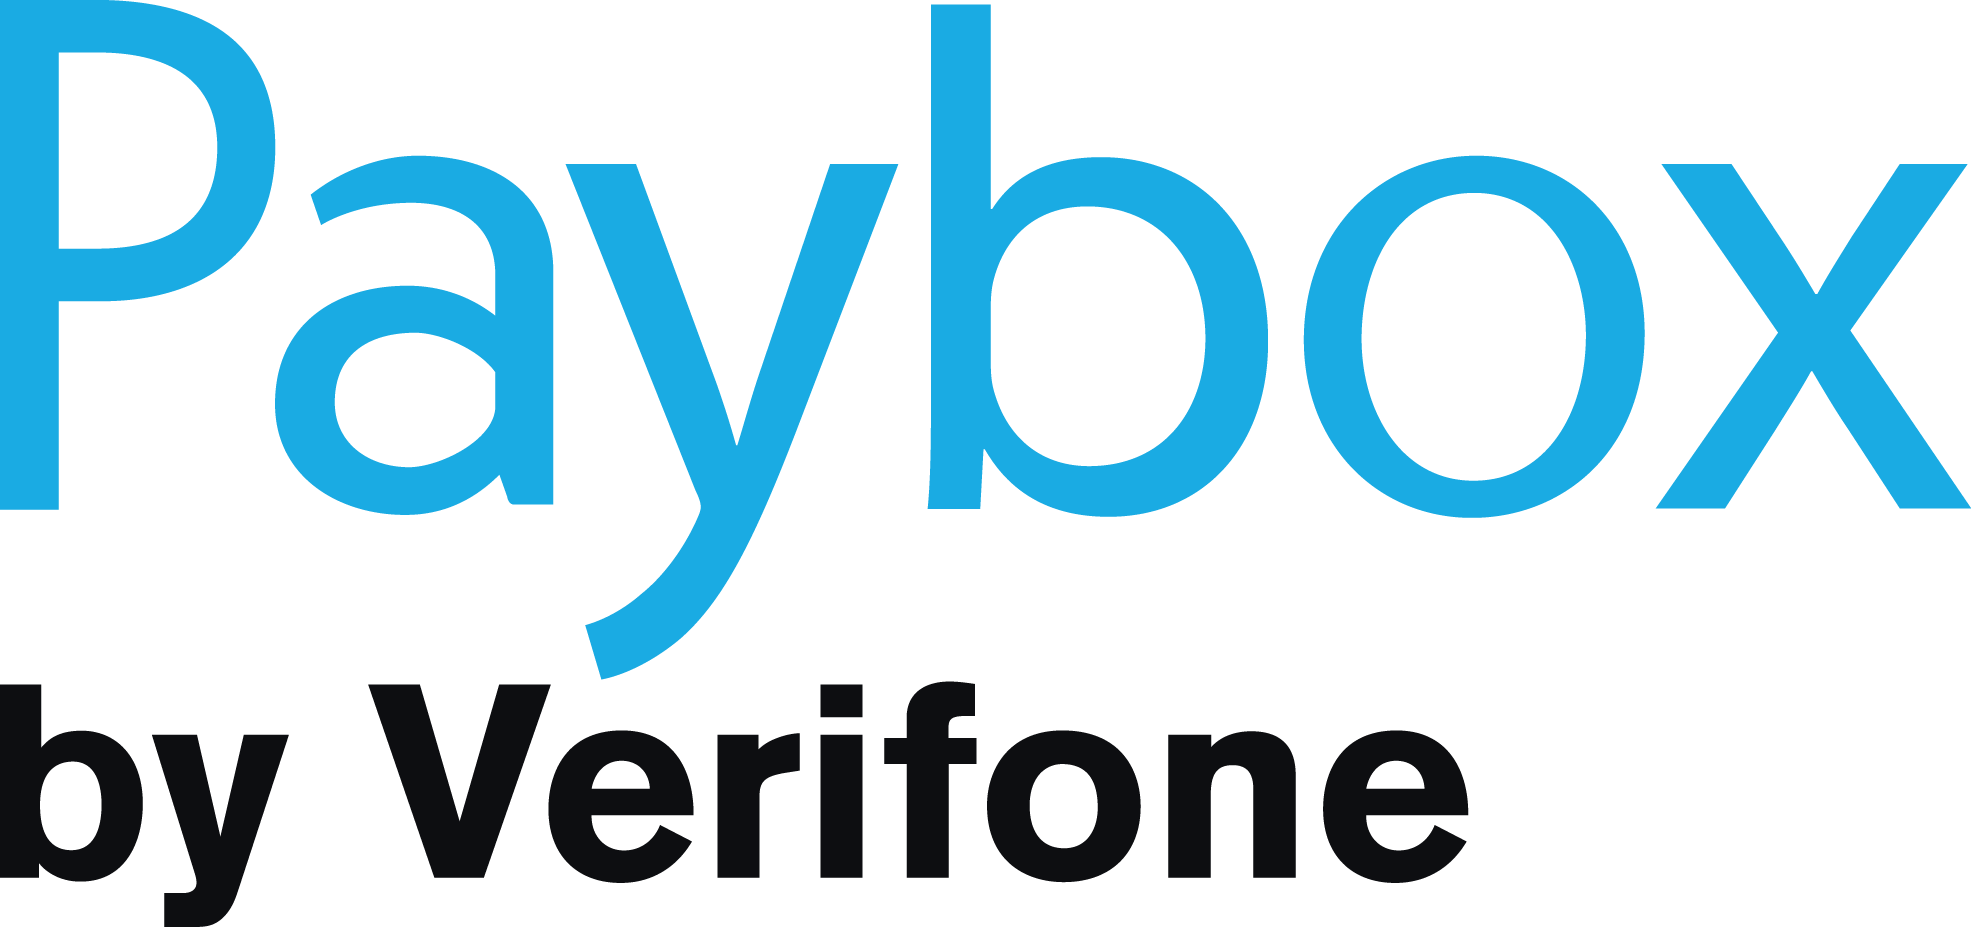 Pay Box Logo - Customer Area - Paybox